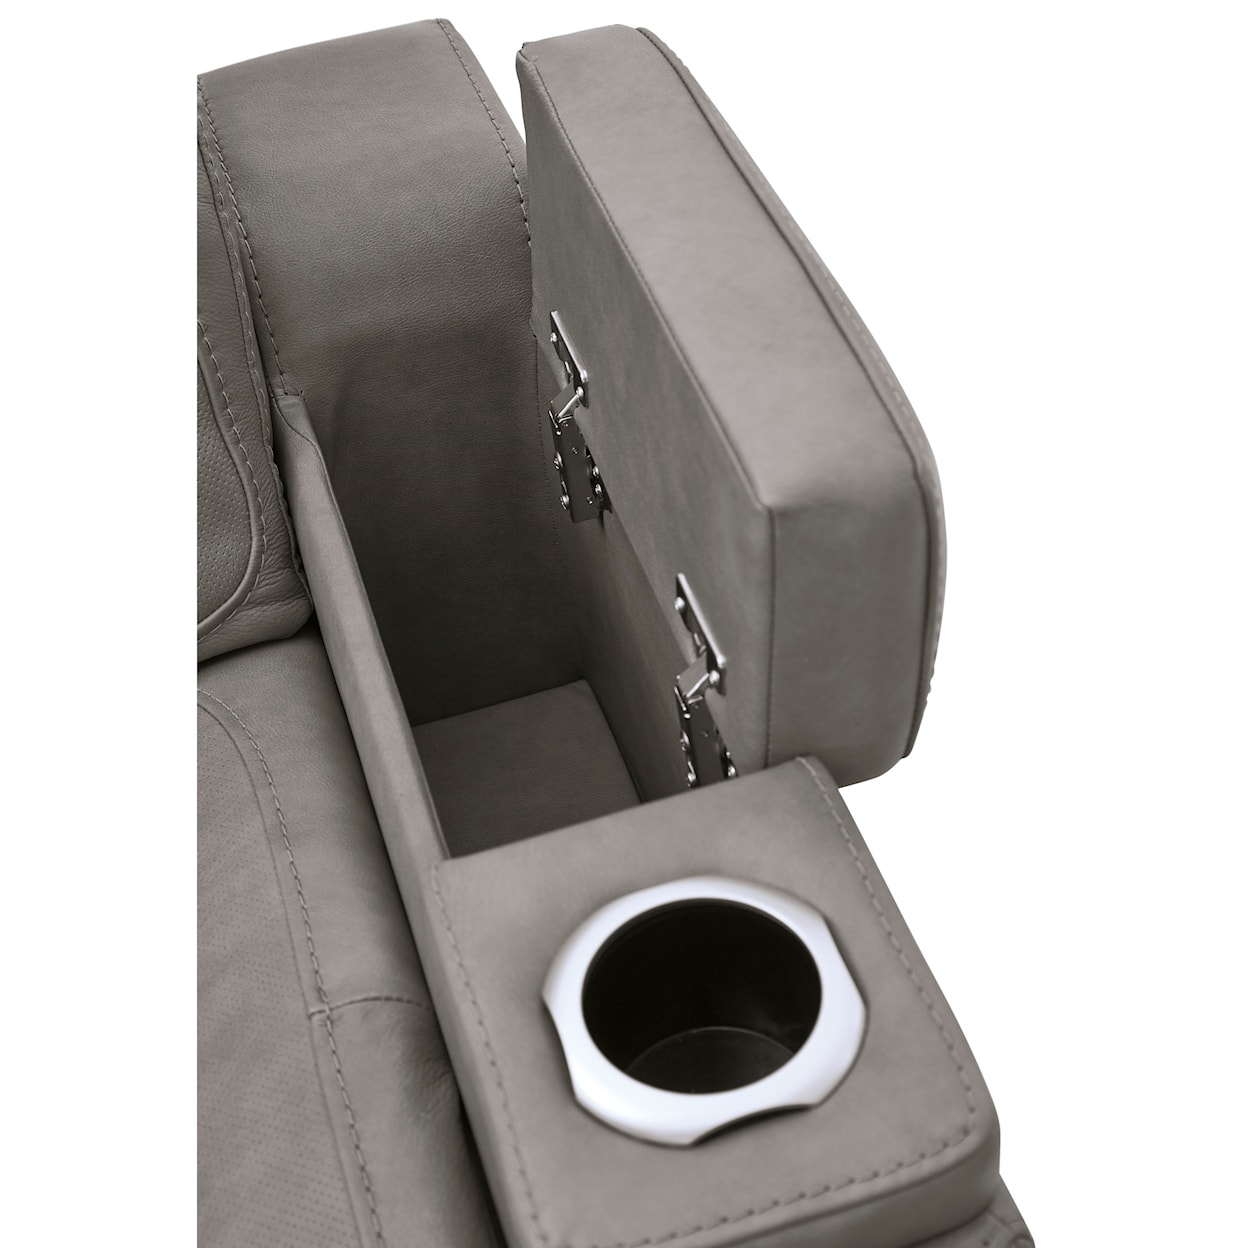 Ashley Furniture Signature Design The Man-Den Power Recliner with Adjustable Headrest